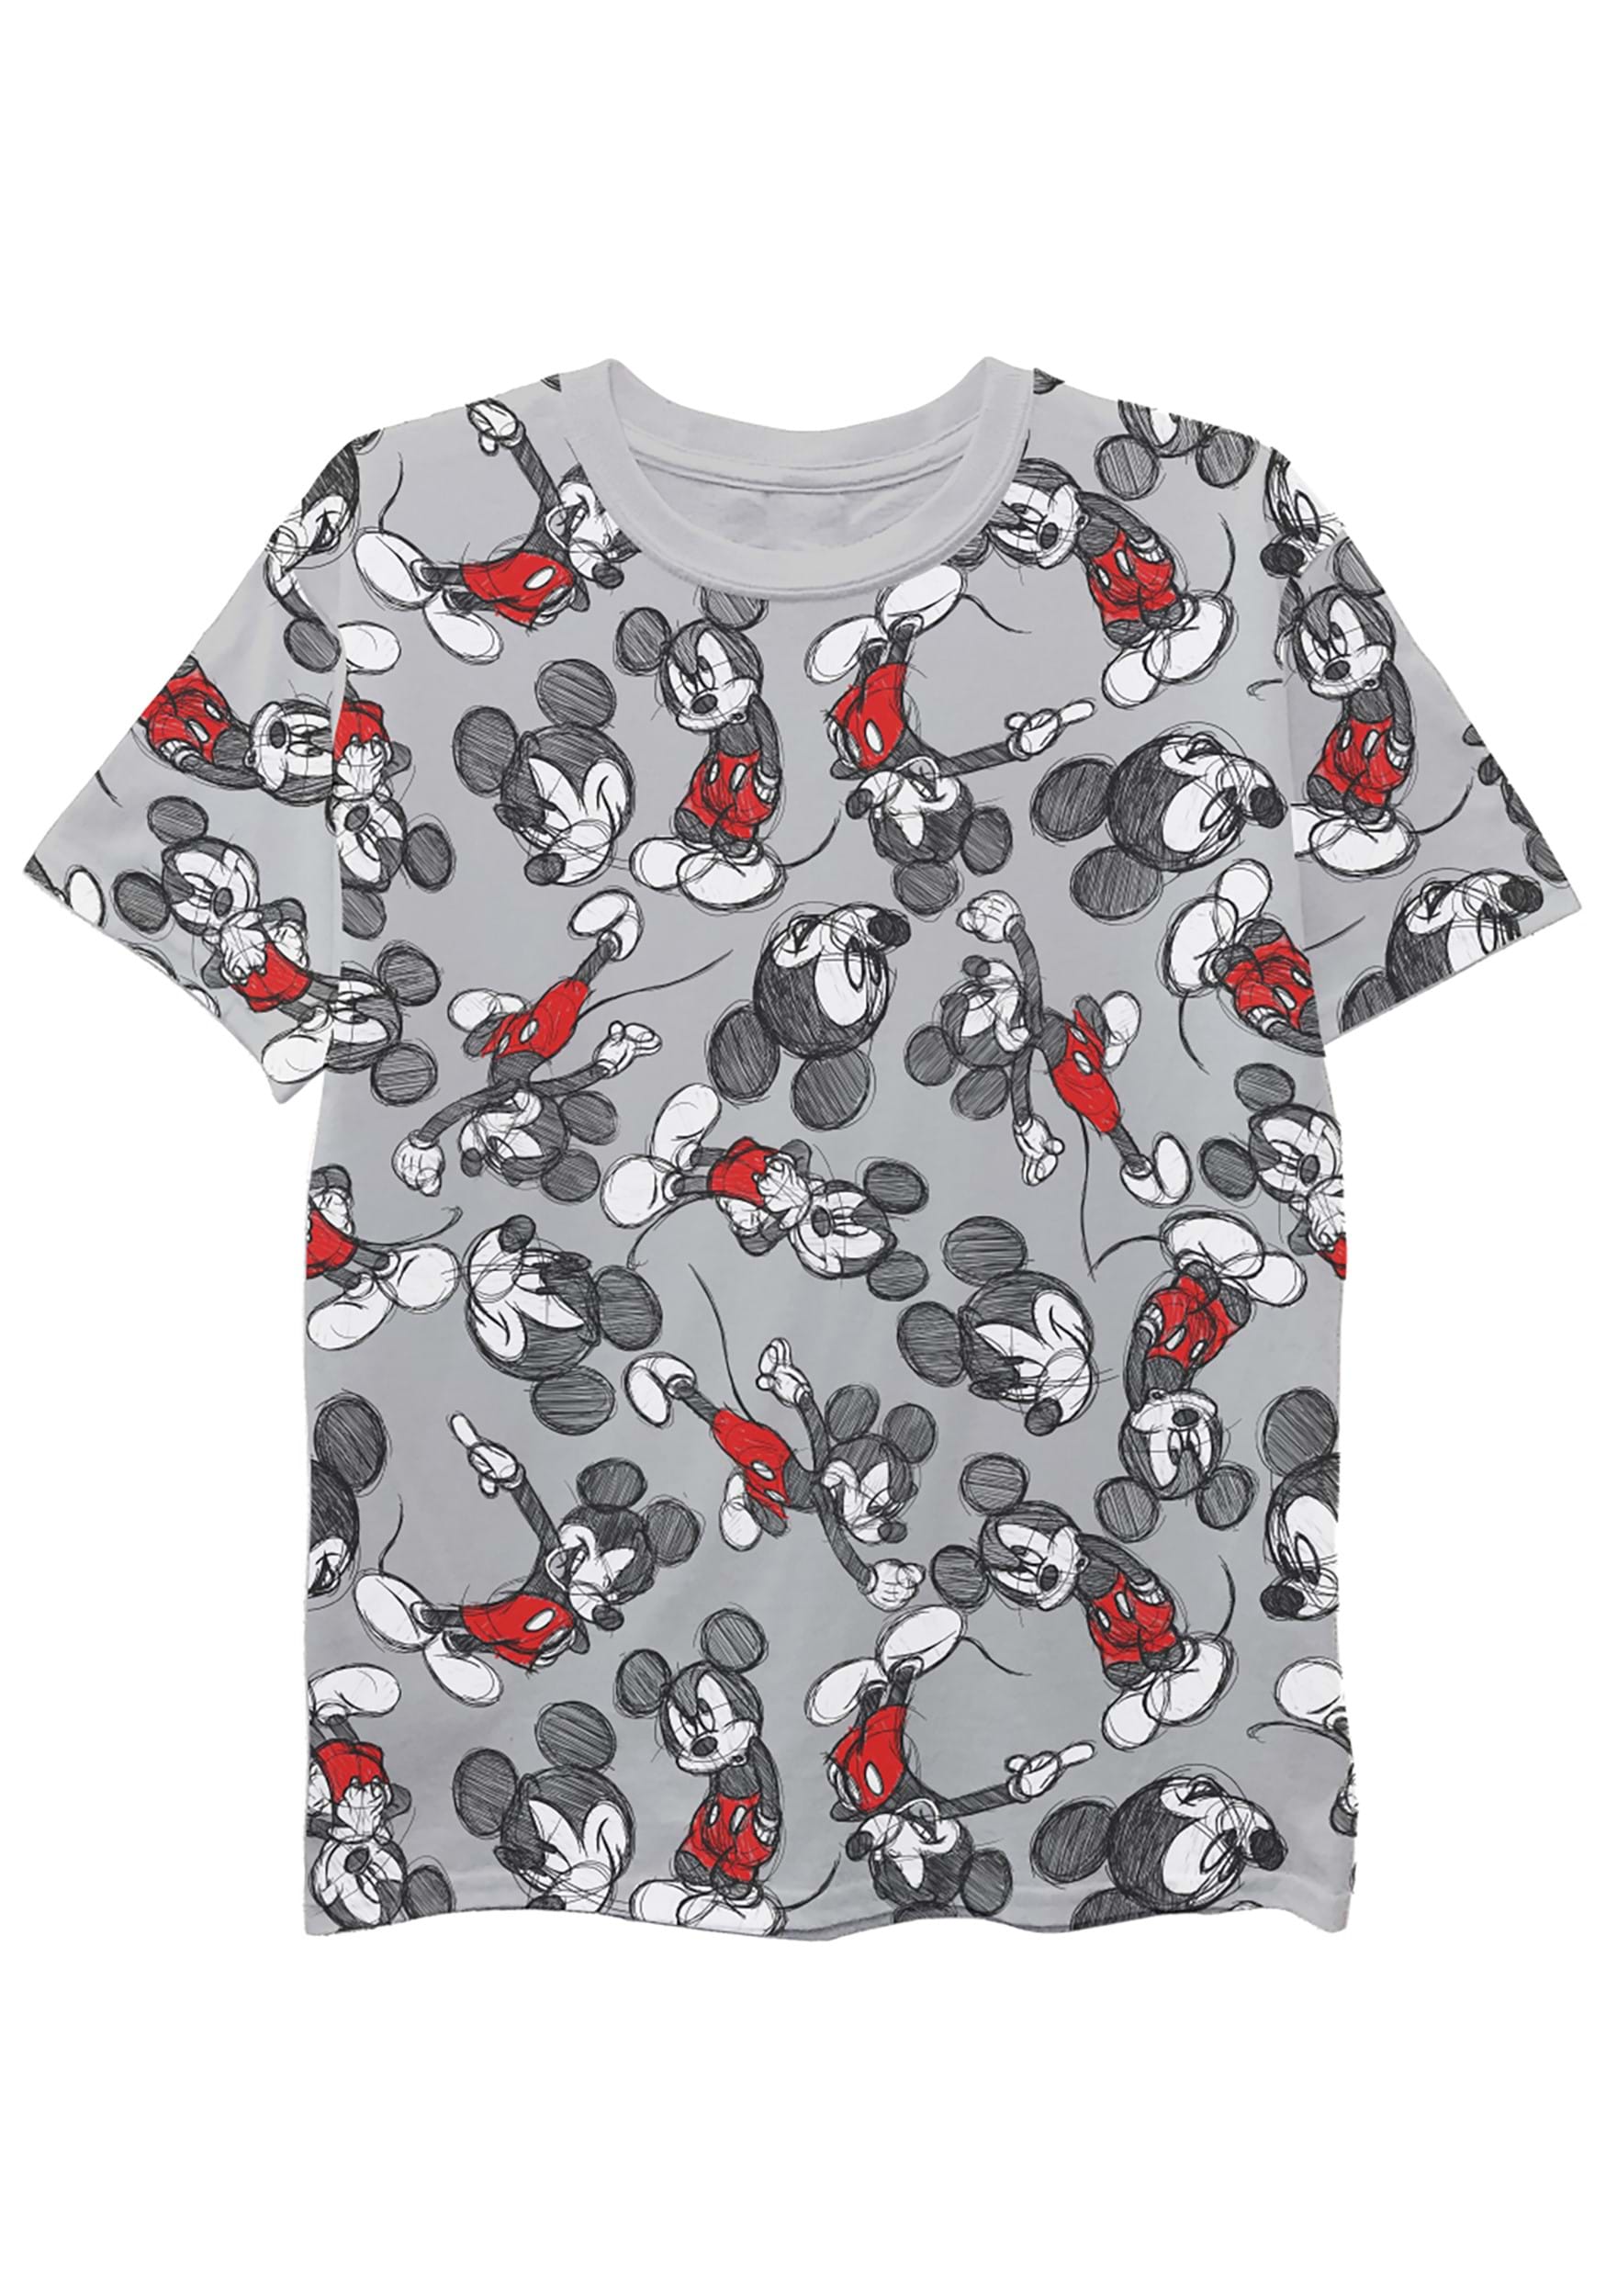 Mickey Mouse All Over Print Boys Tee